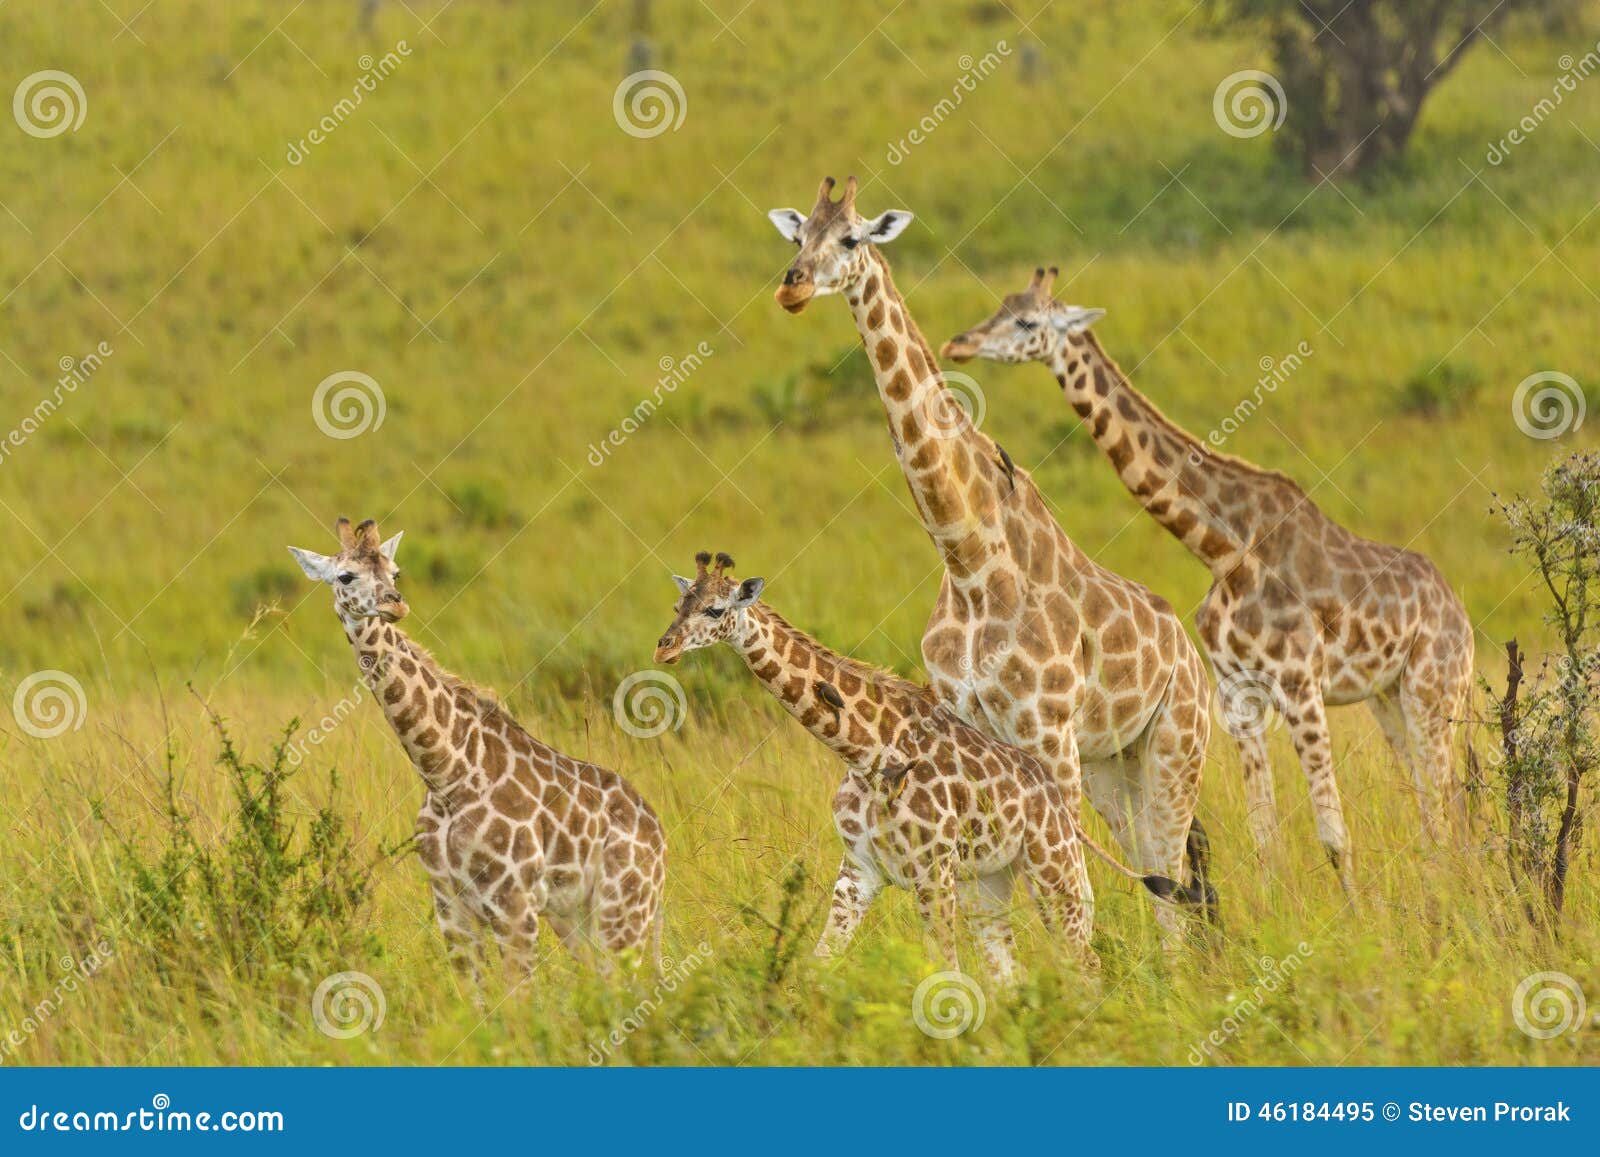 giraffe family in the veldt